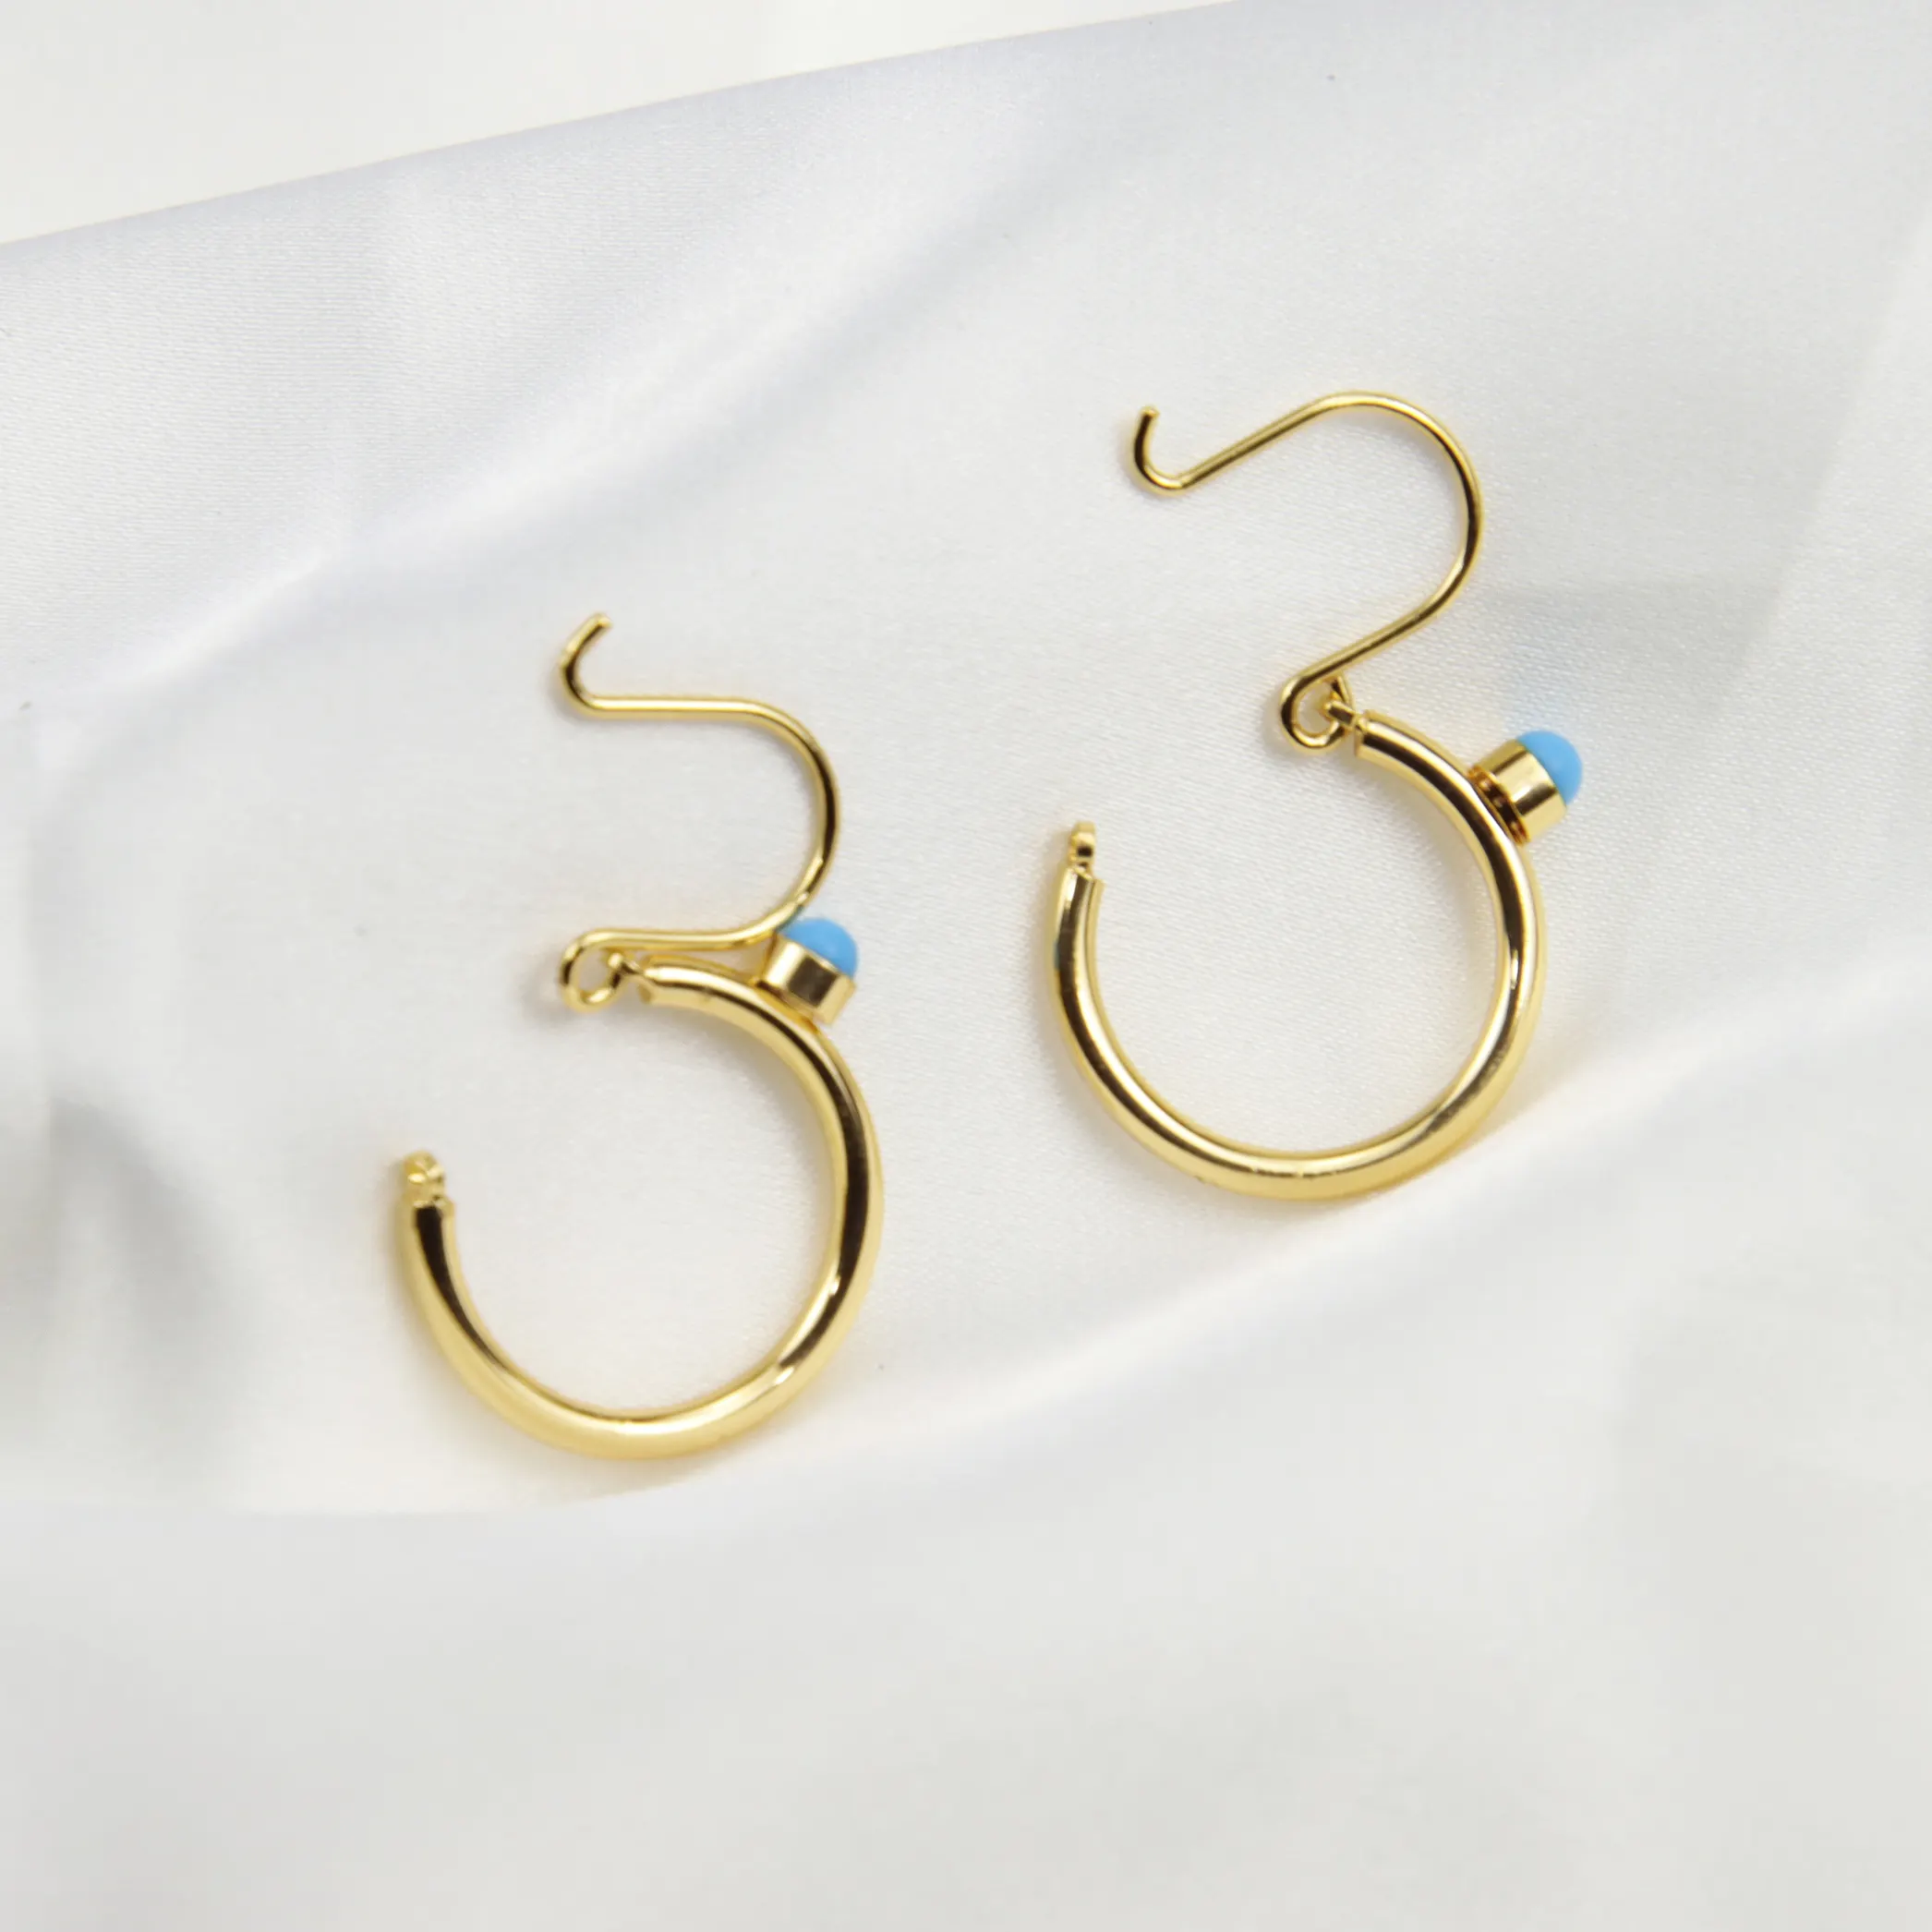 Ebay Top Verkoper Magnetische Earring Studs Metalen Kwaliteit Fancy Cool Earring Voor Meisje